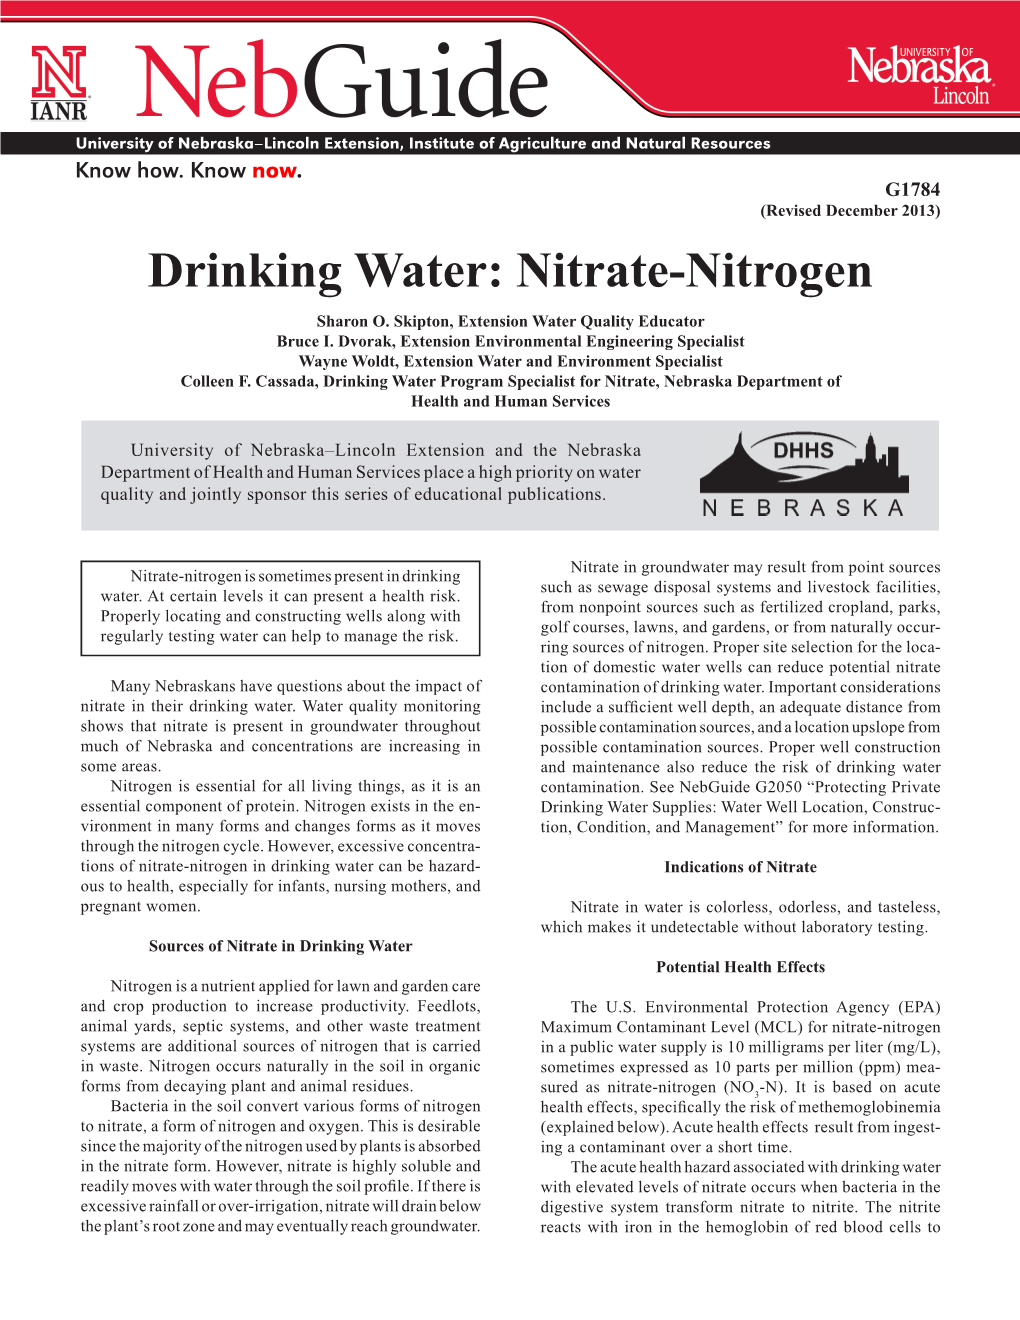 Drinking Water: Nitrate-Nitrogen Sharon O